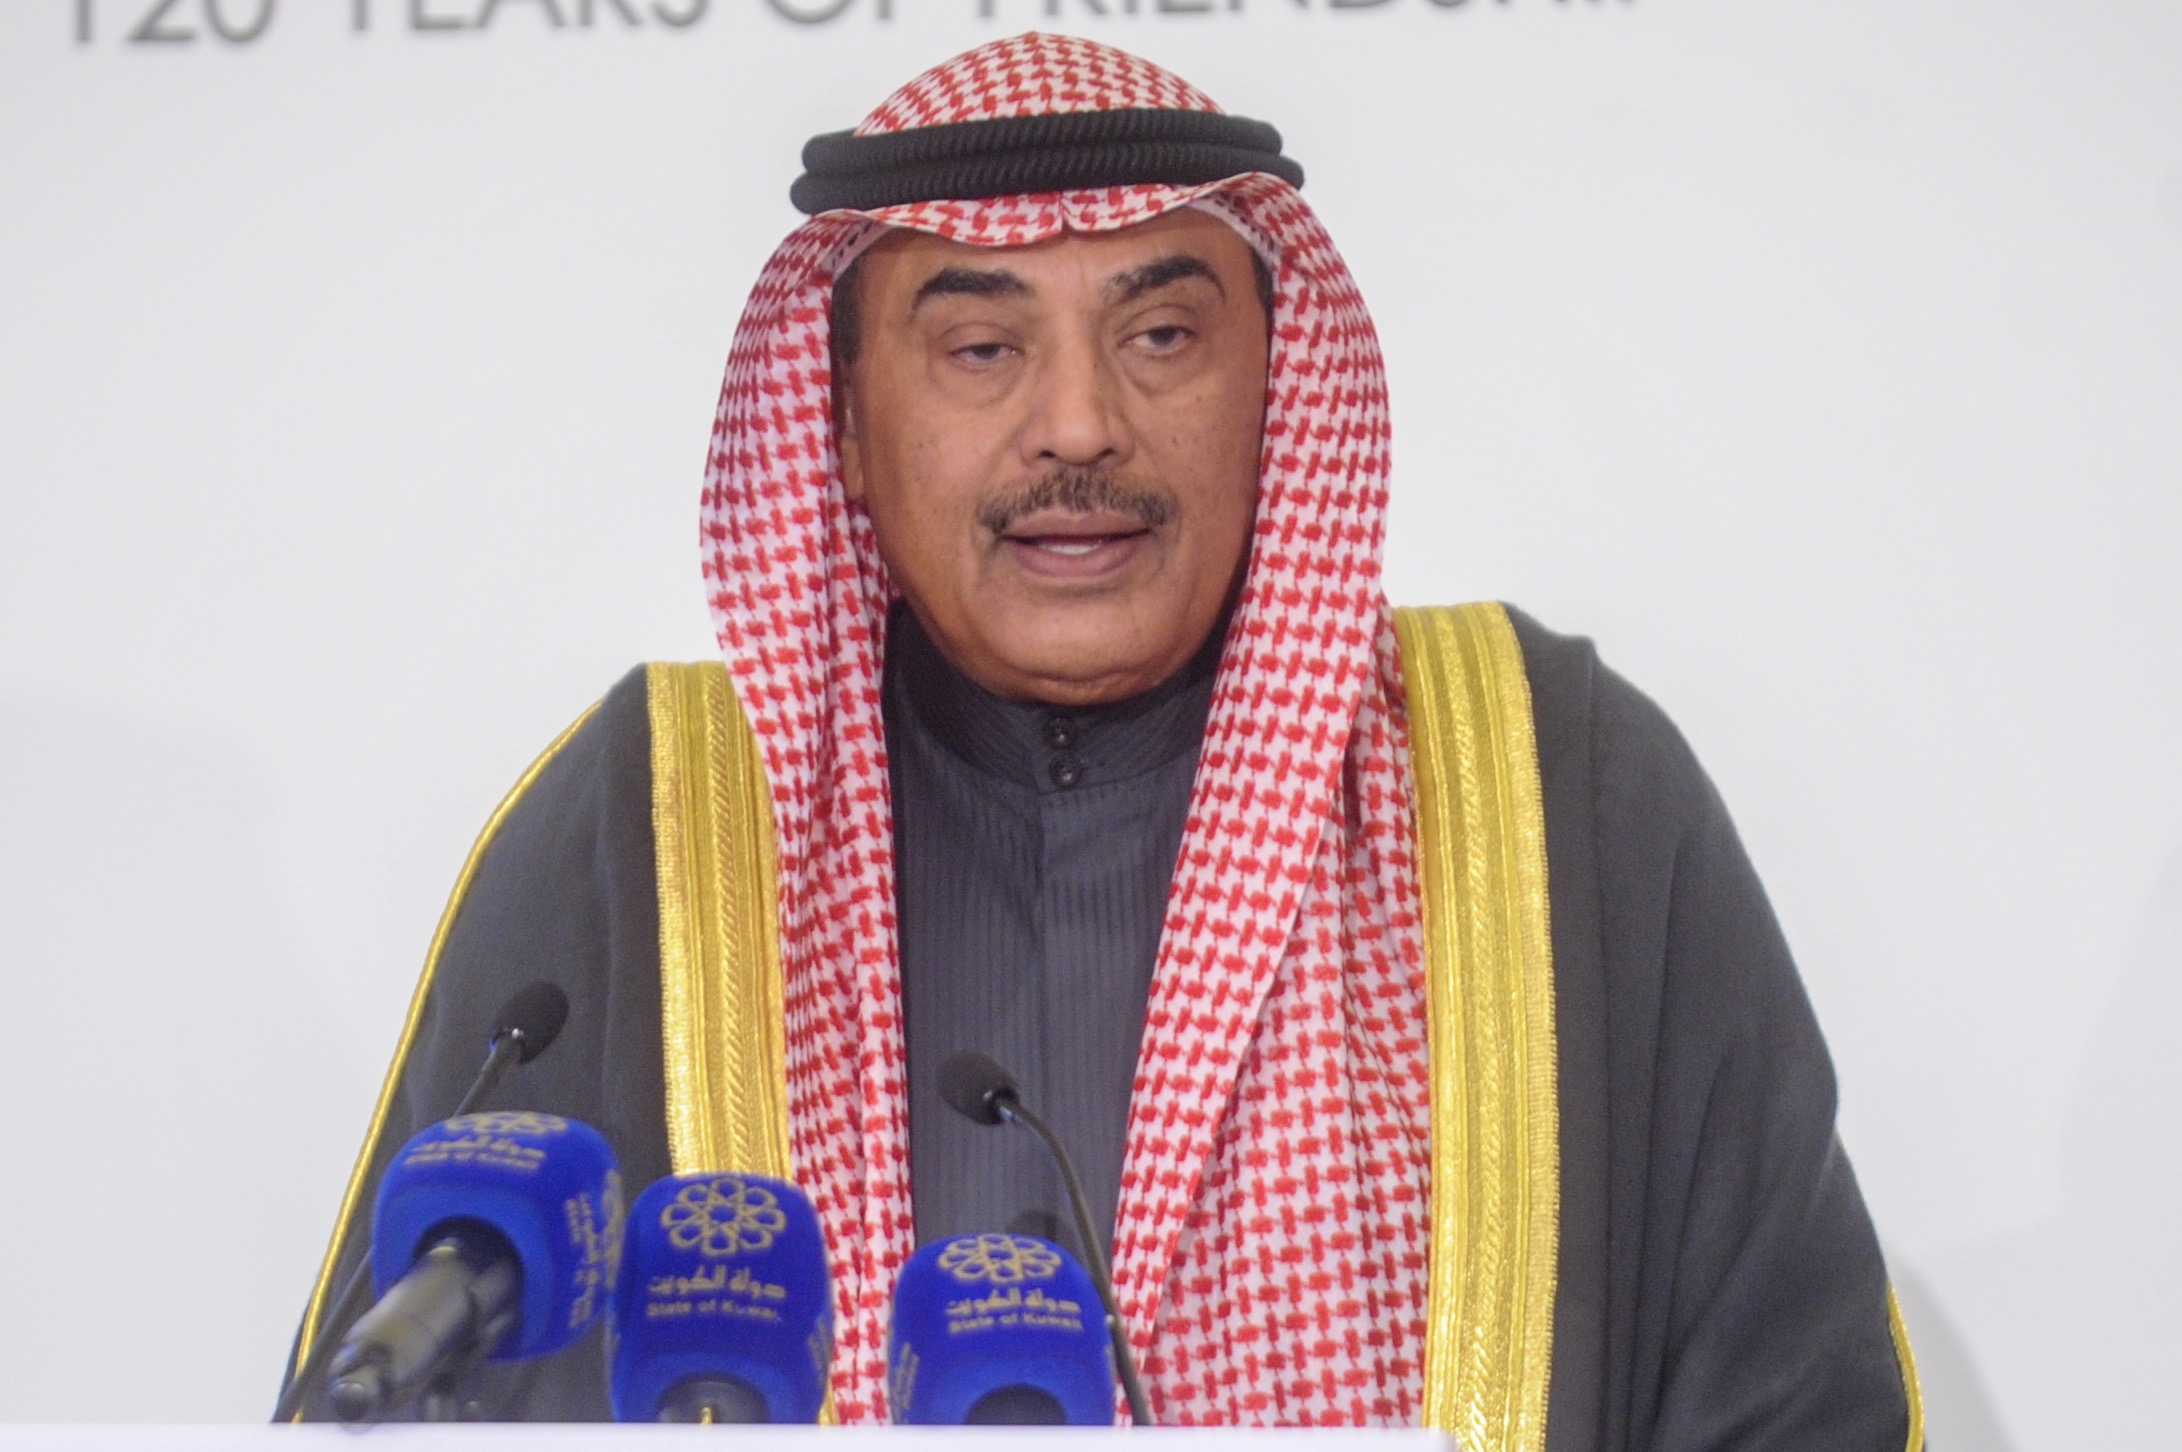 Kuwait's Deputy Prime Minister and Foreign Minister Sheikh Sabah Khaled Al-Hamad Al-Sabah speaking at the ceremony